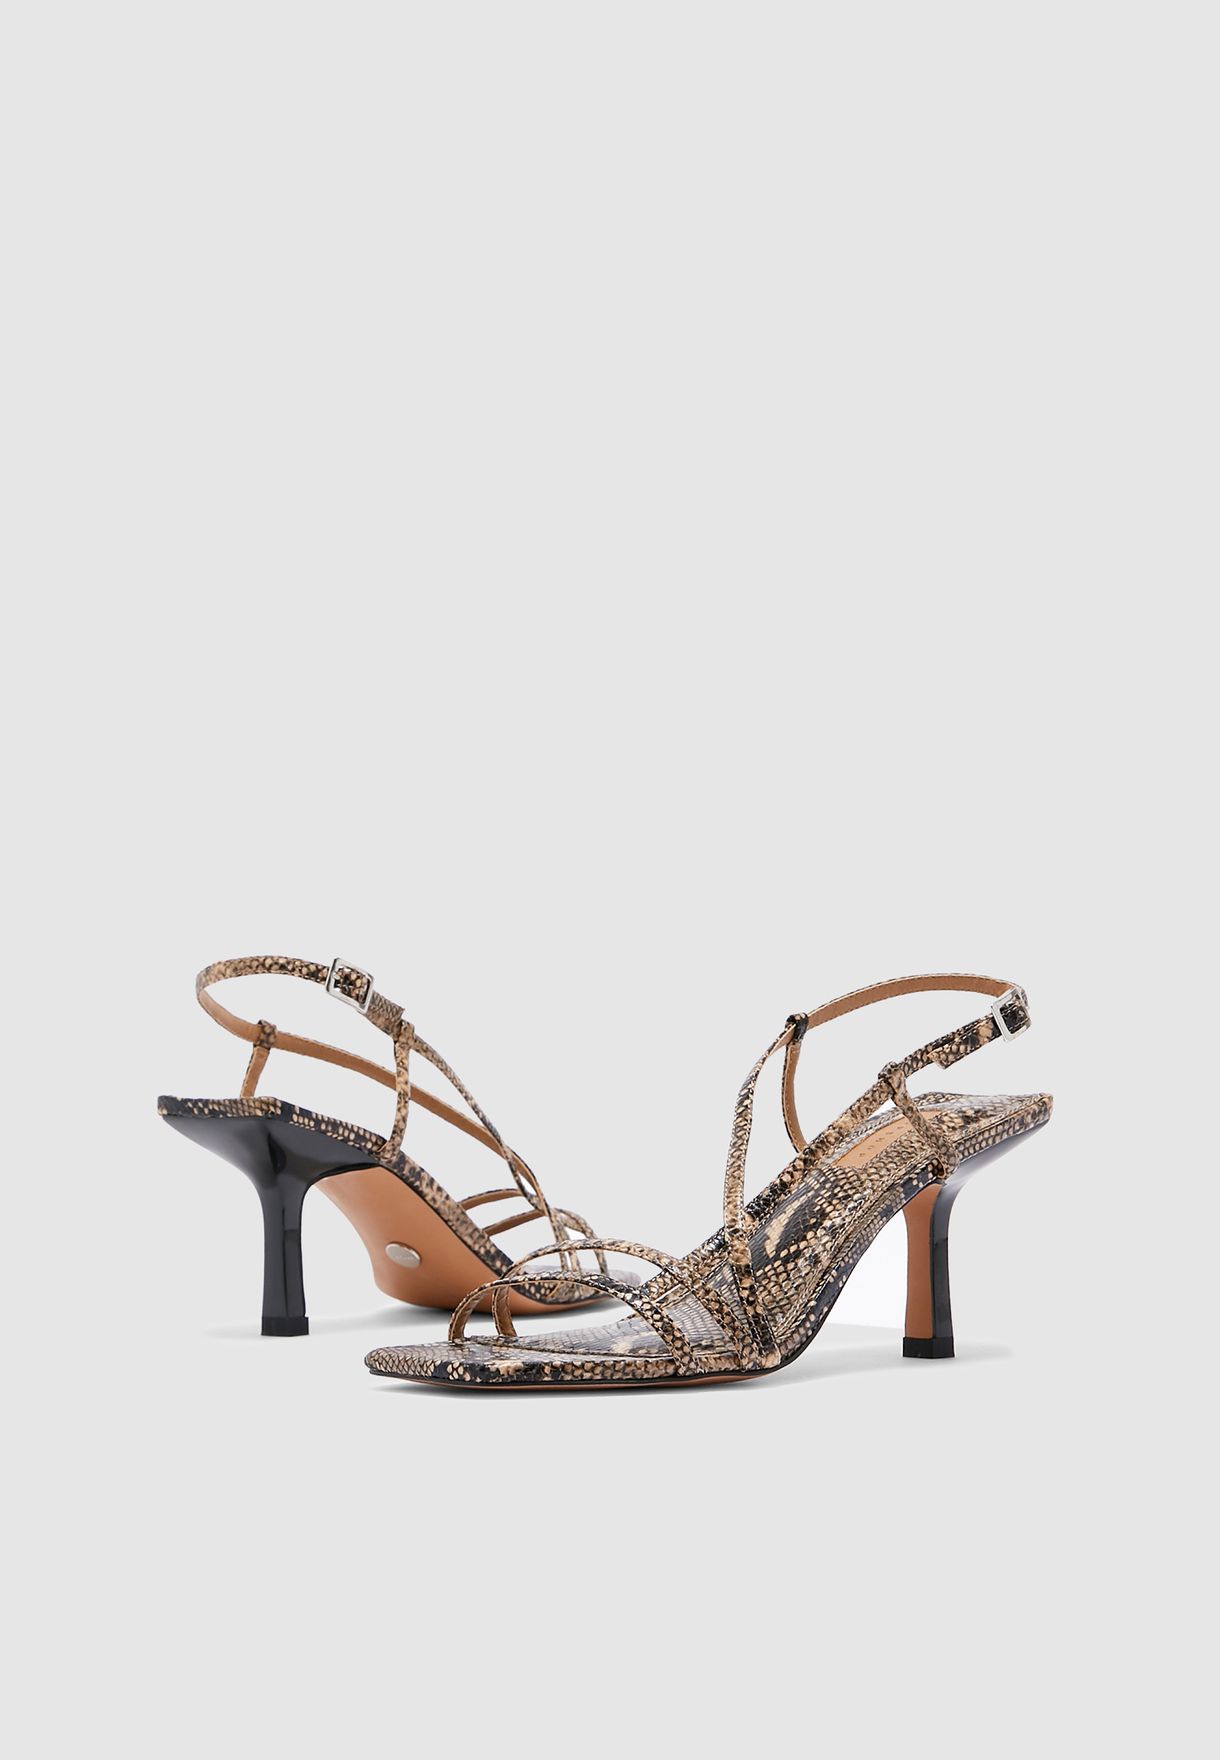 lime heeled sandals